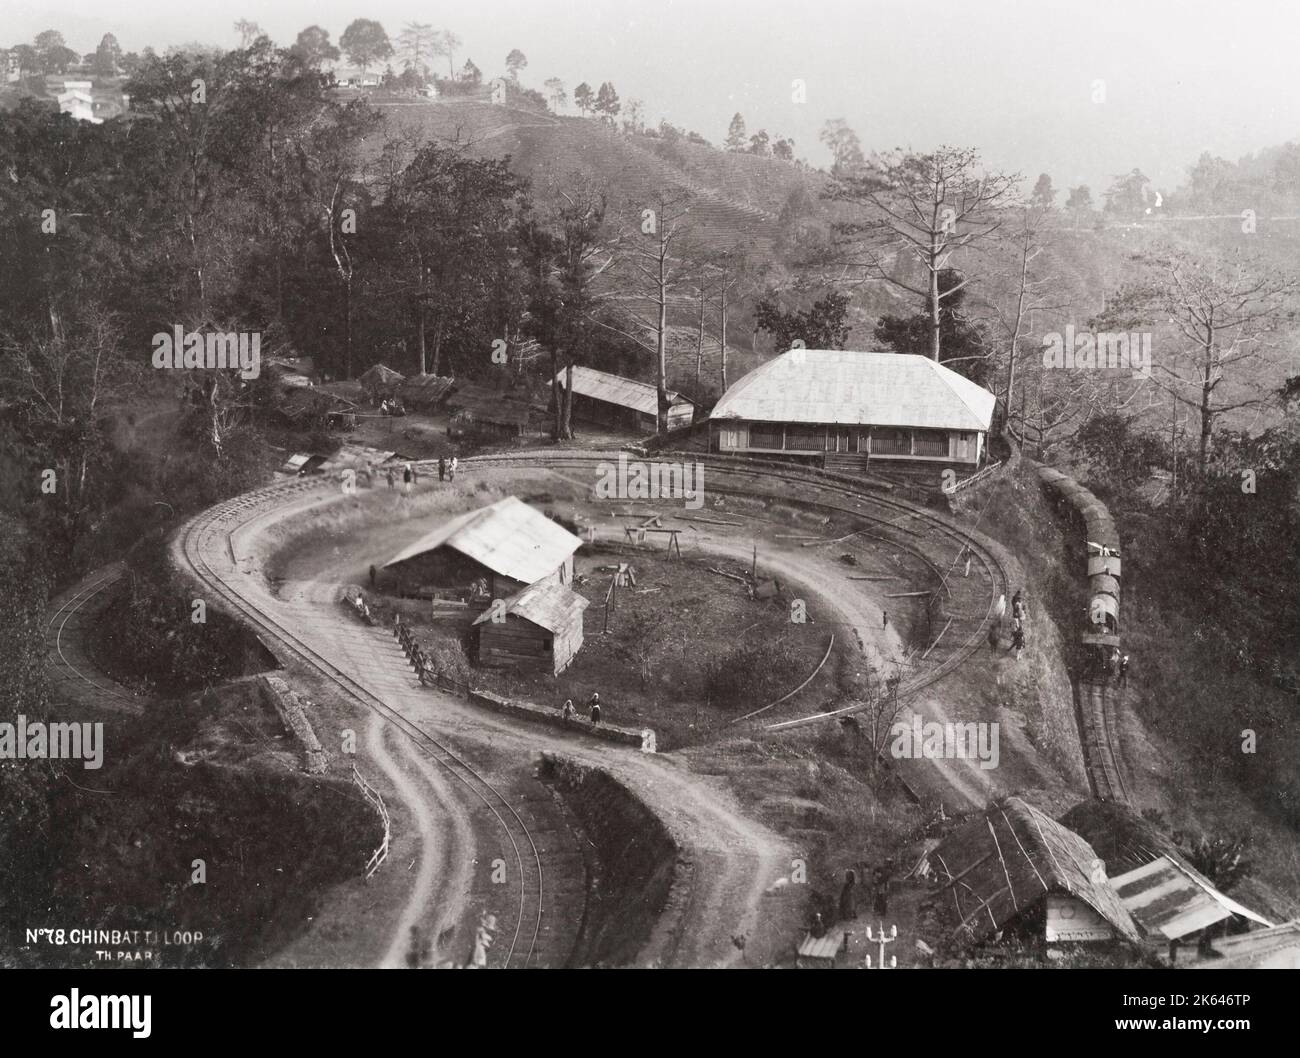 19th century vintage photograph: Chinbatti loop, tracks on the Darjeeling Railway, railroad, India. Stock Photo